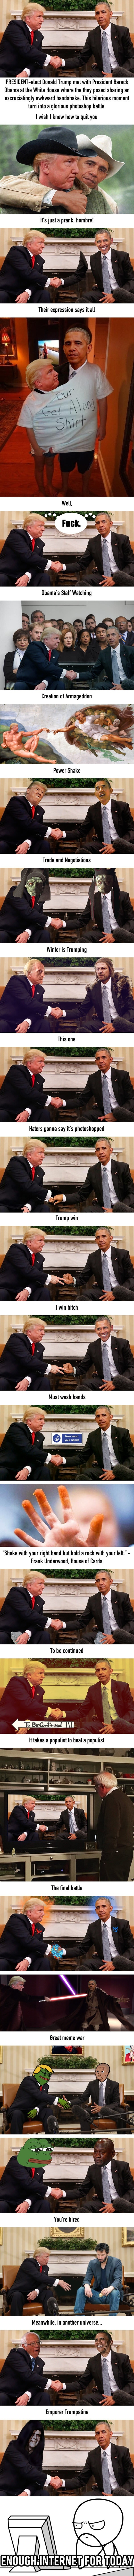 Trump and Obamas first awkward meeting